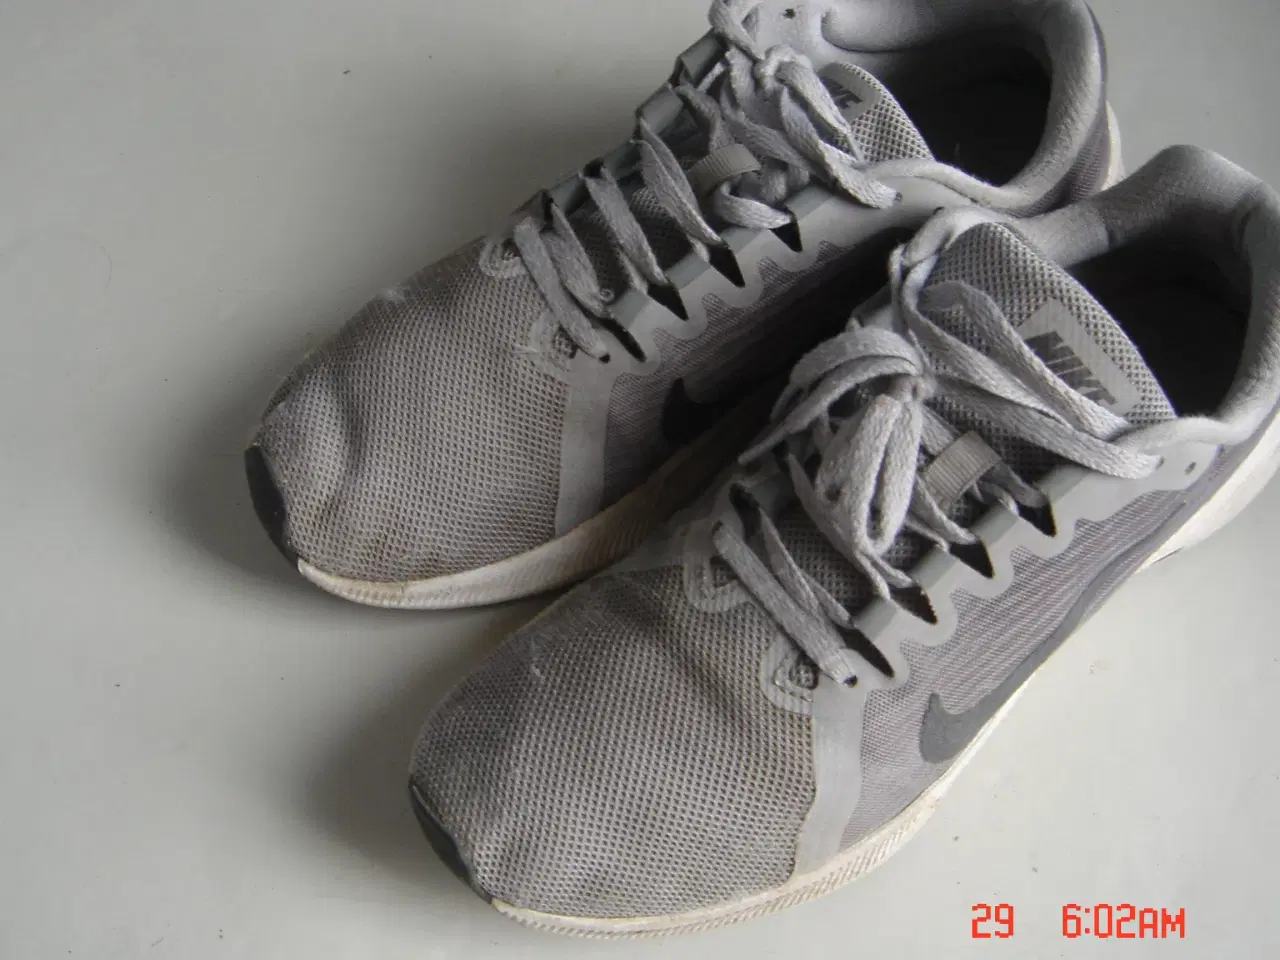 Billede 1 - 2 par ens Nike sko